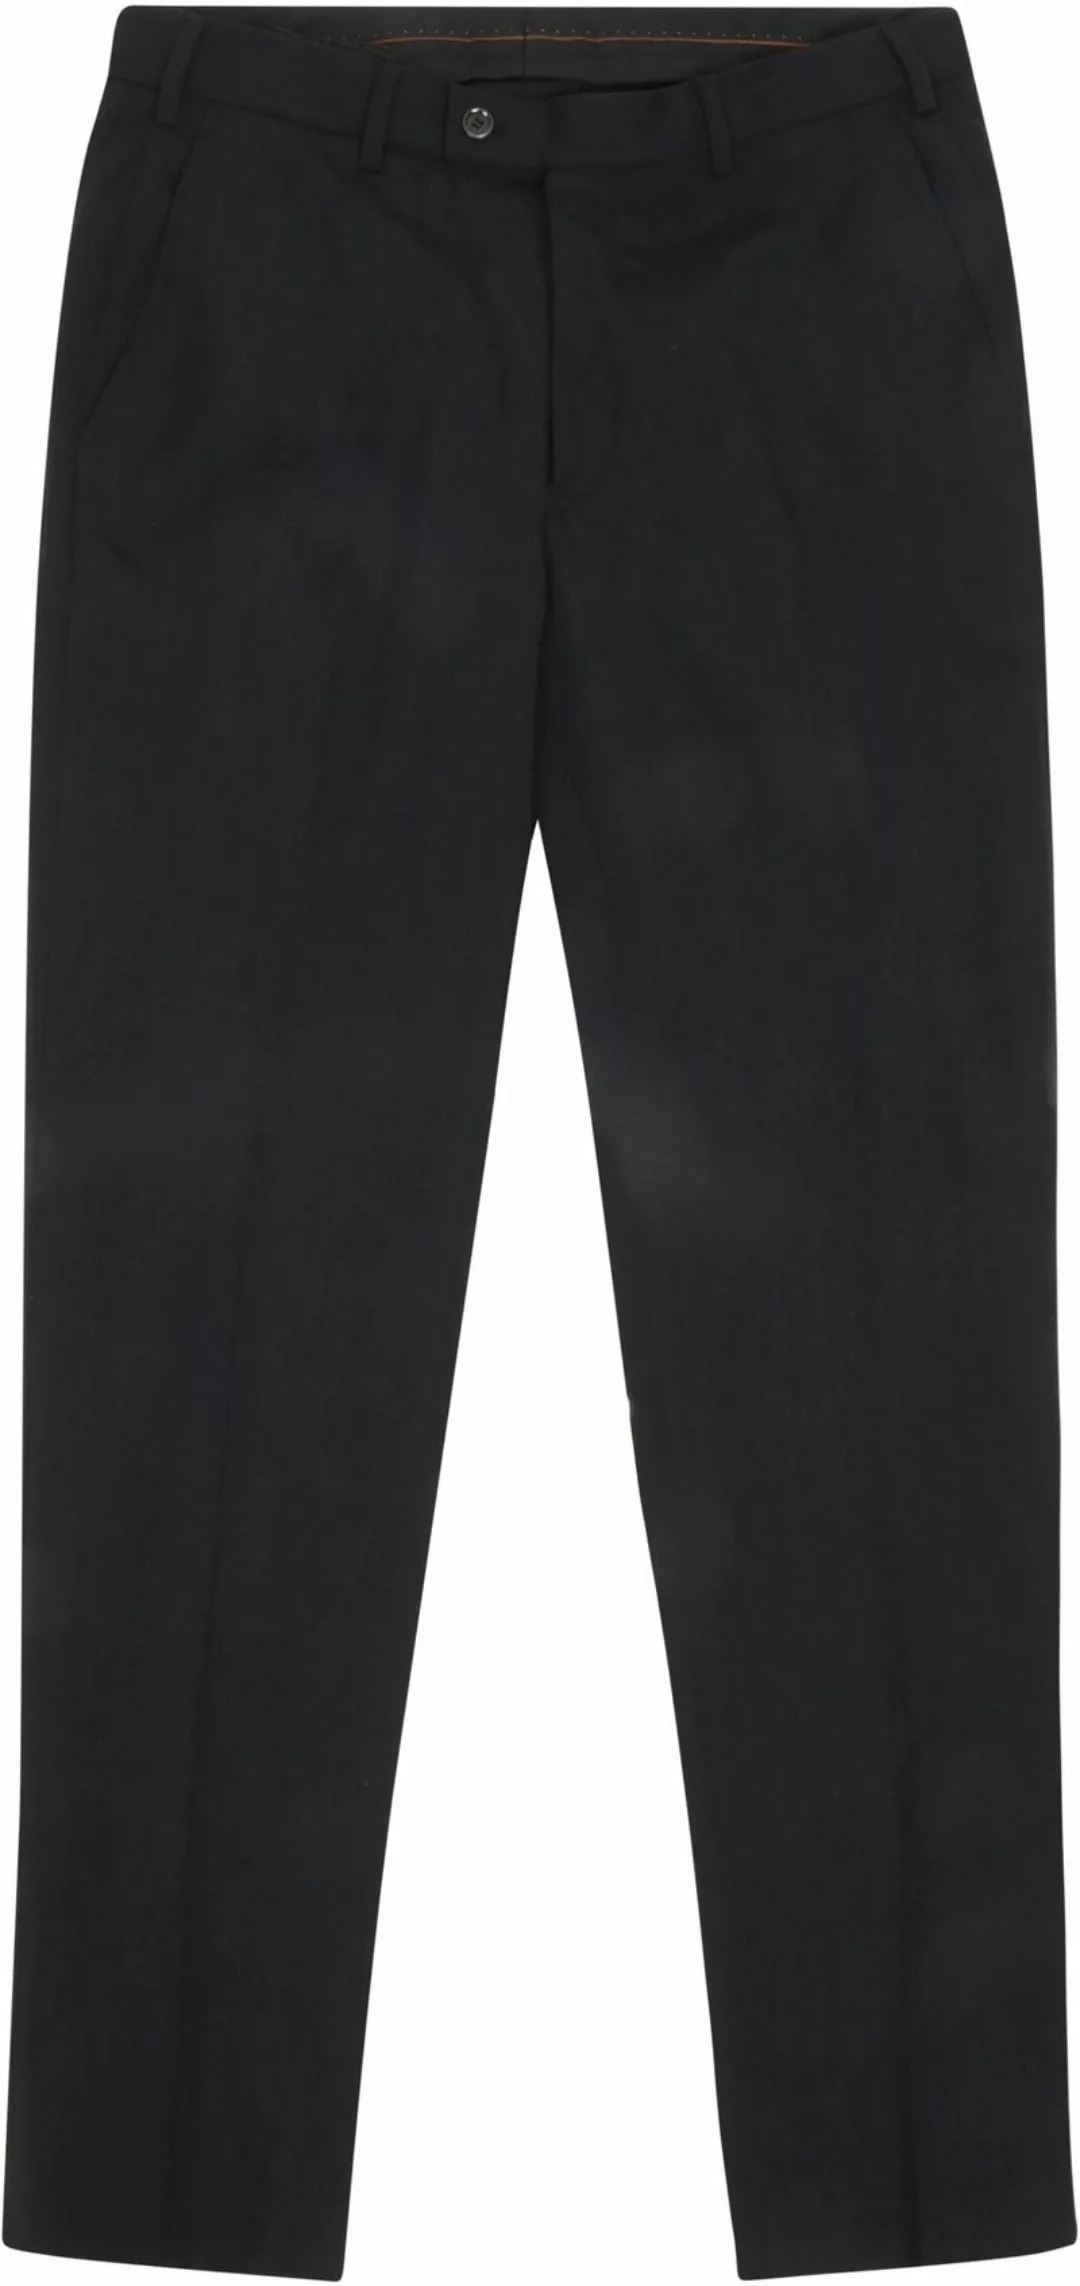 Suitable Pantalon Holbeck Anthrazit Charc - Größe 54 günstig online kaufen